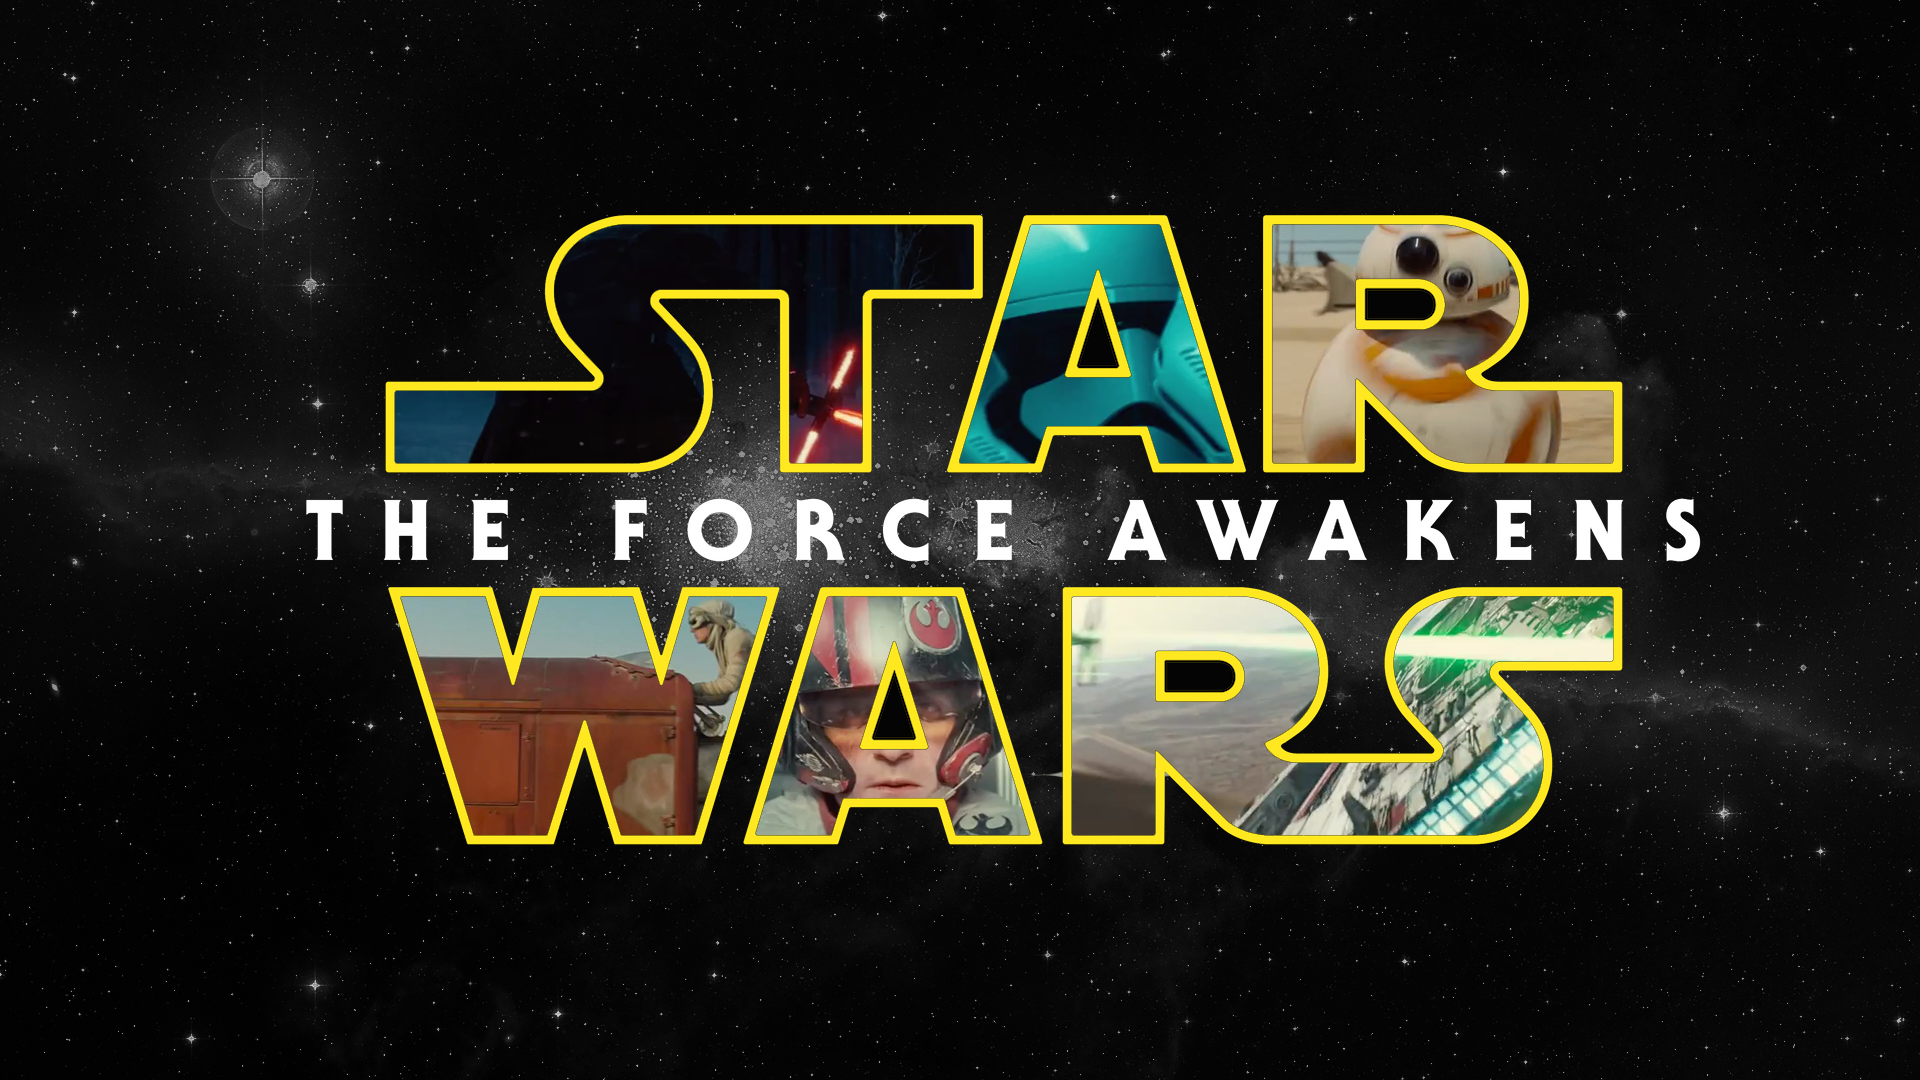 Star Wars Episode VII: The Force Awakens – A Long Awaited Return to a Galaxy Far Far Away!